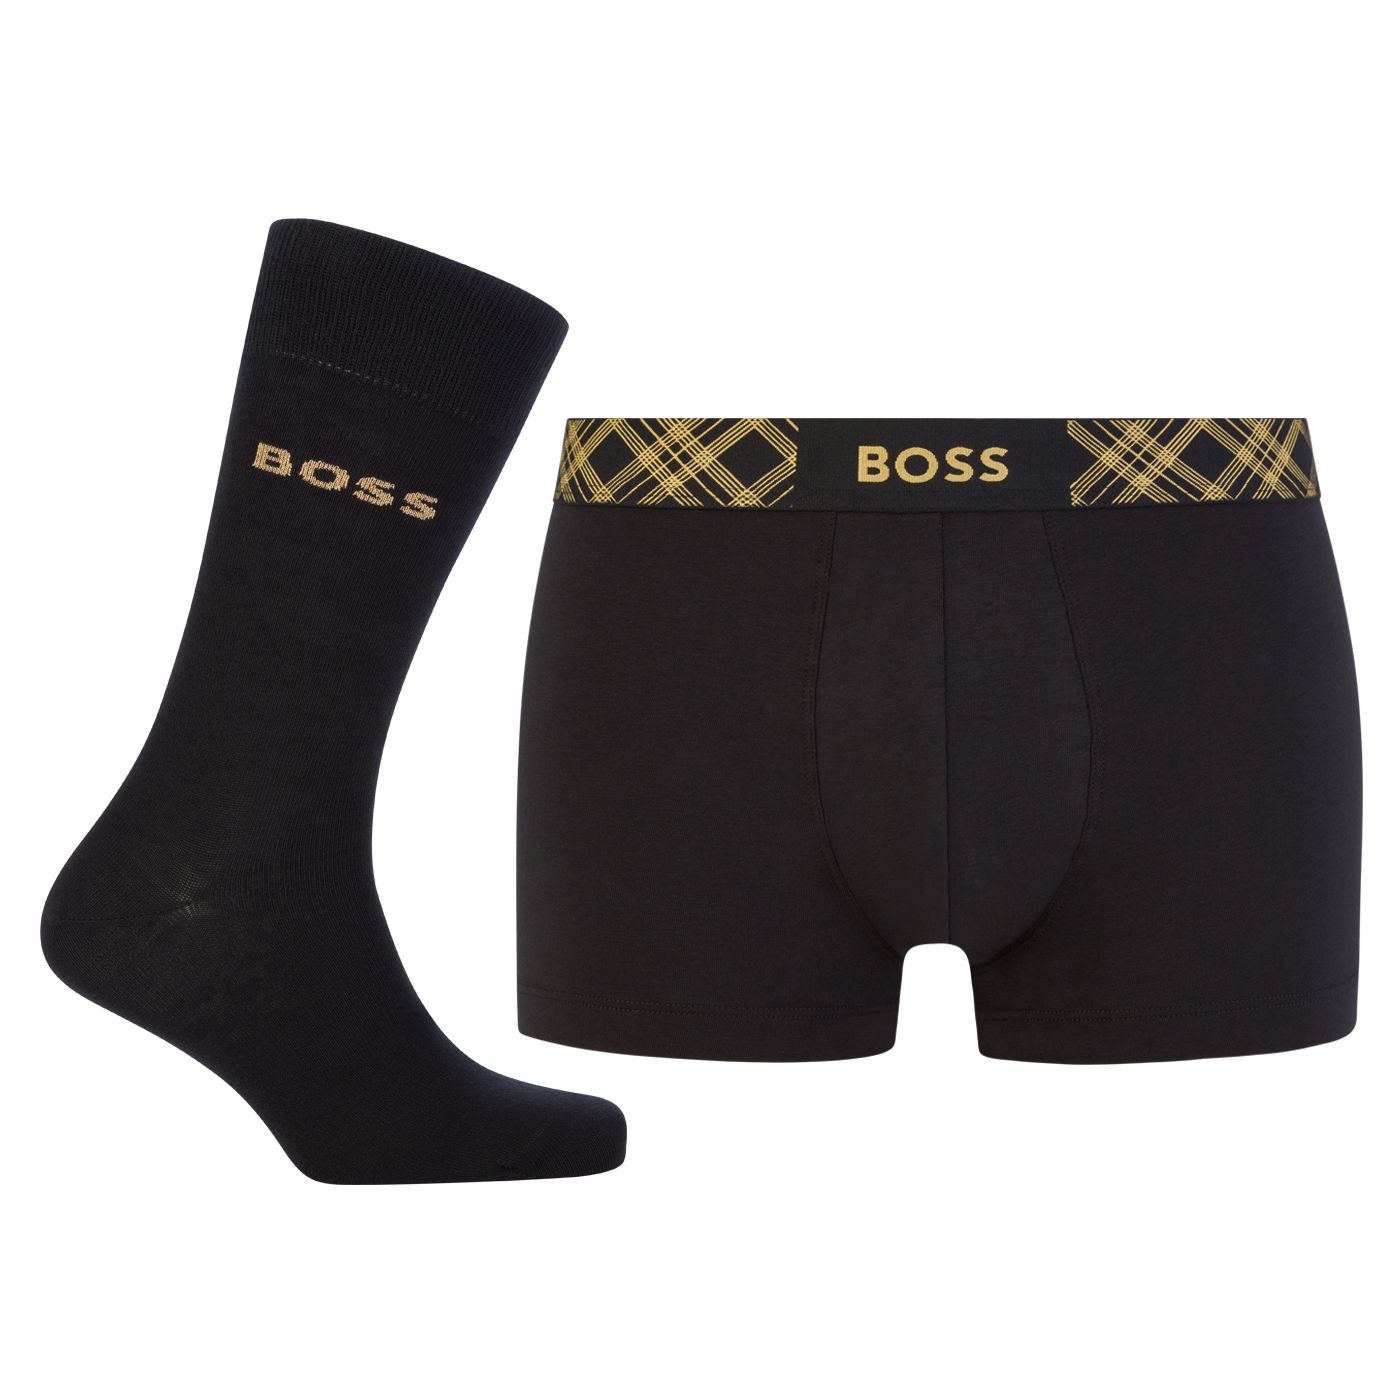 Hugo Boss Pánská sada - boxerky a ponožky BOSS 50500374-001 XL